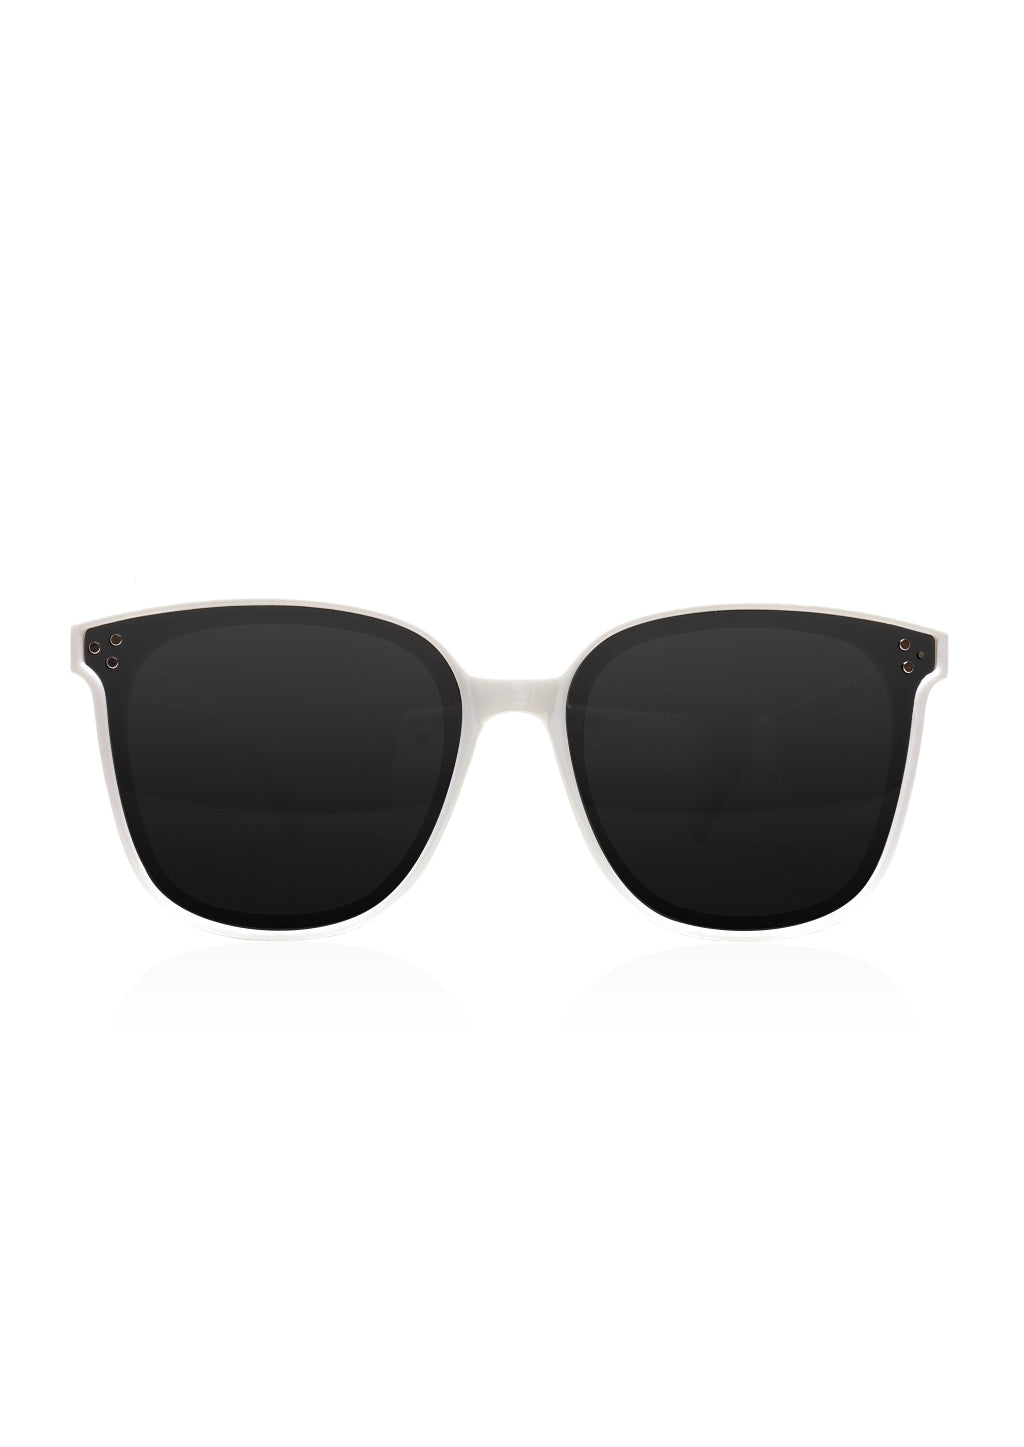 Lotus Wayfarer sunglasses - Front